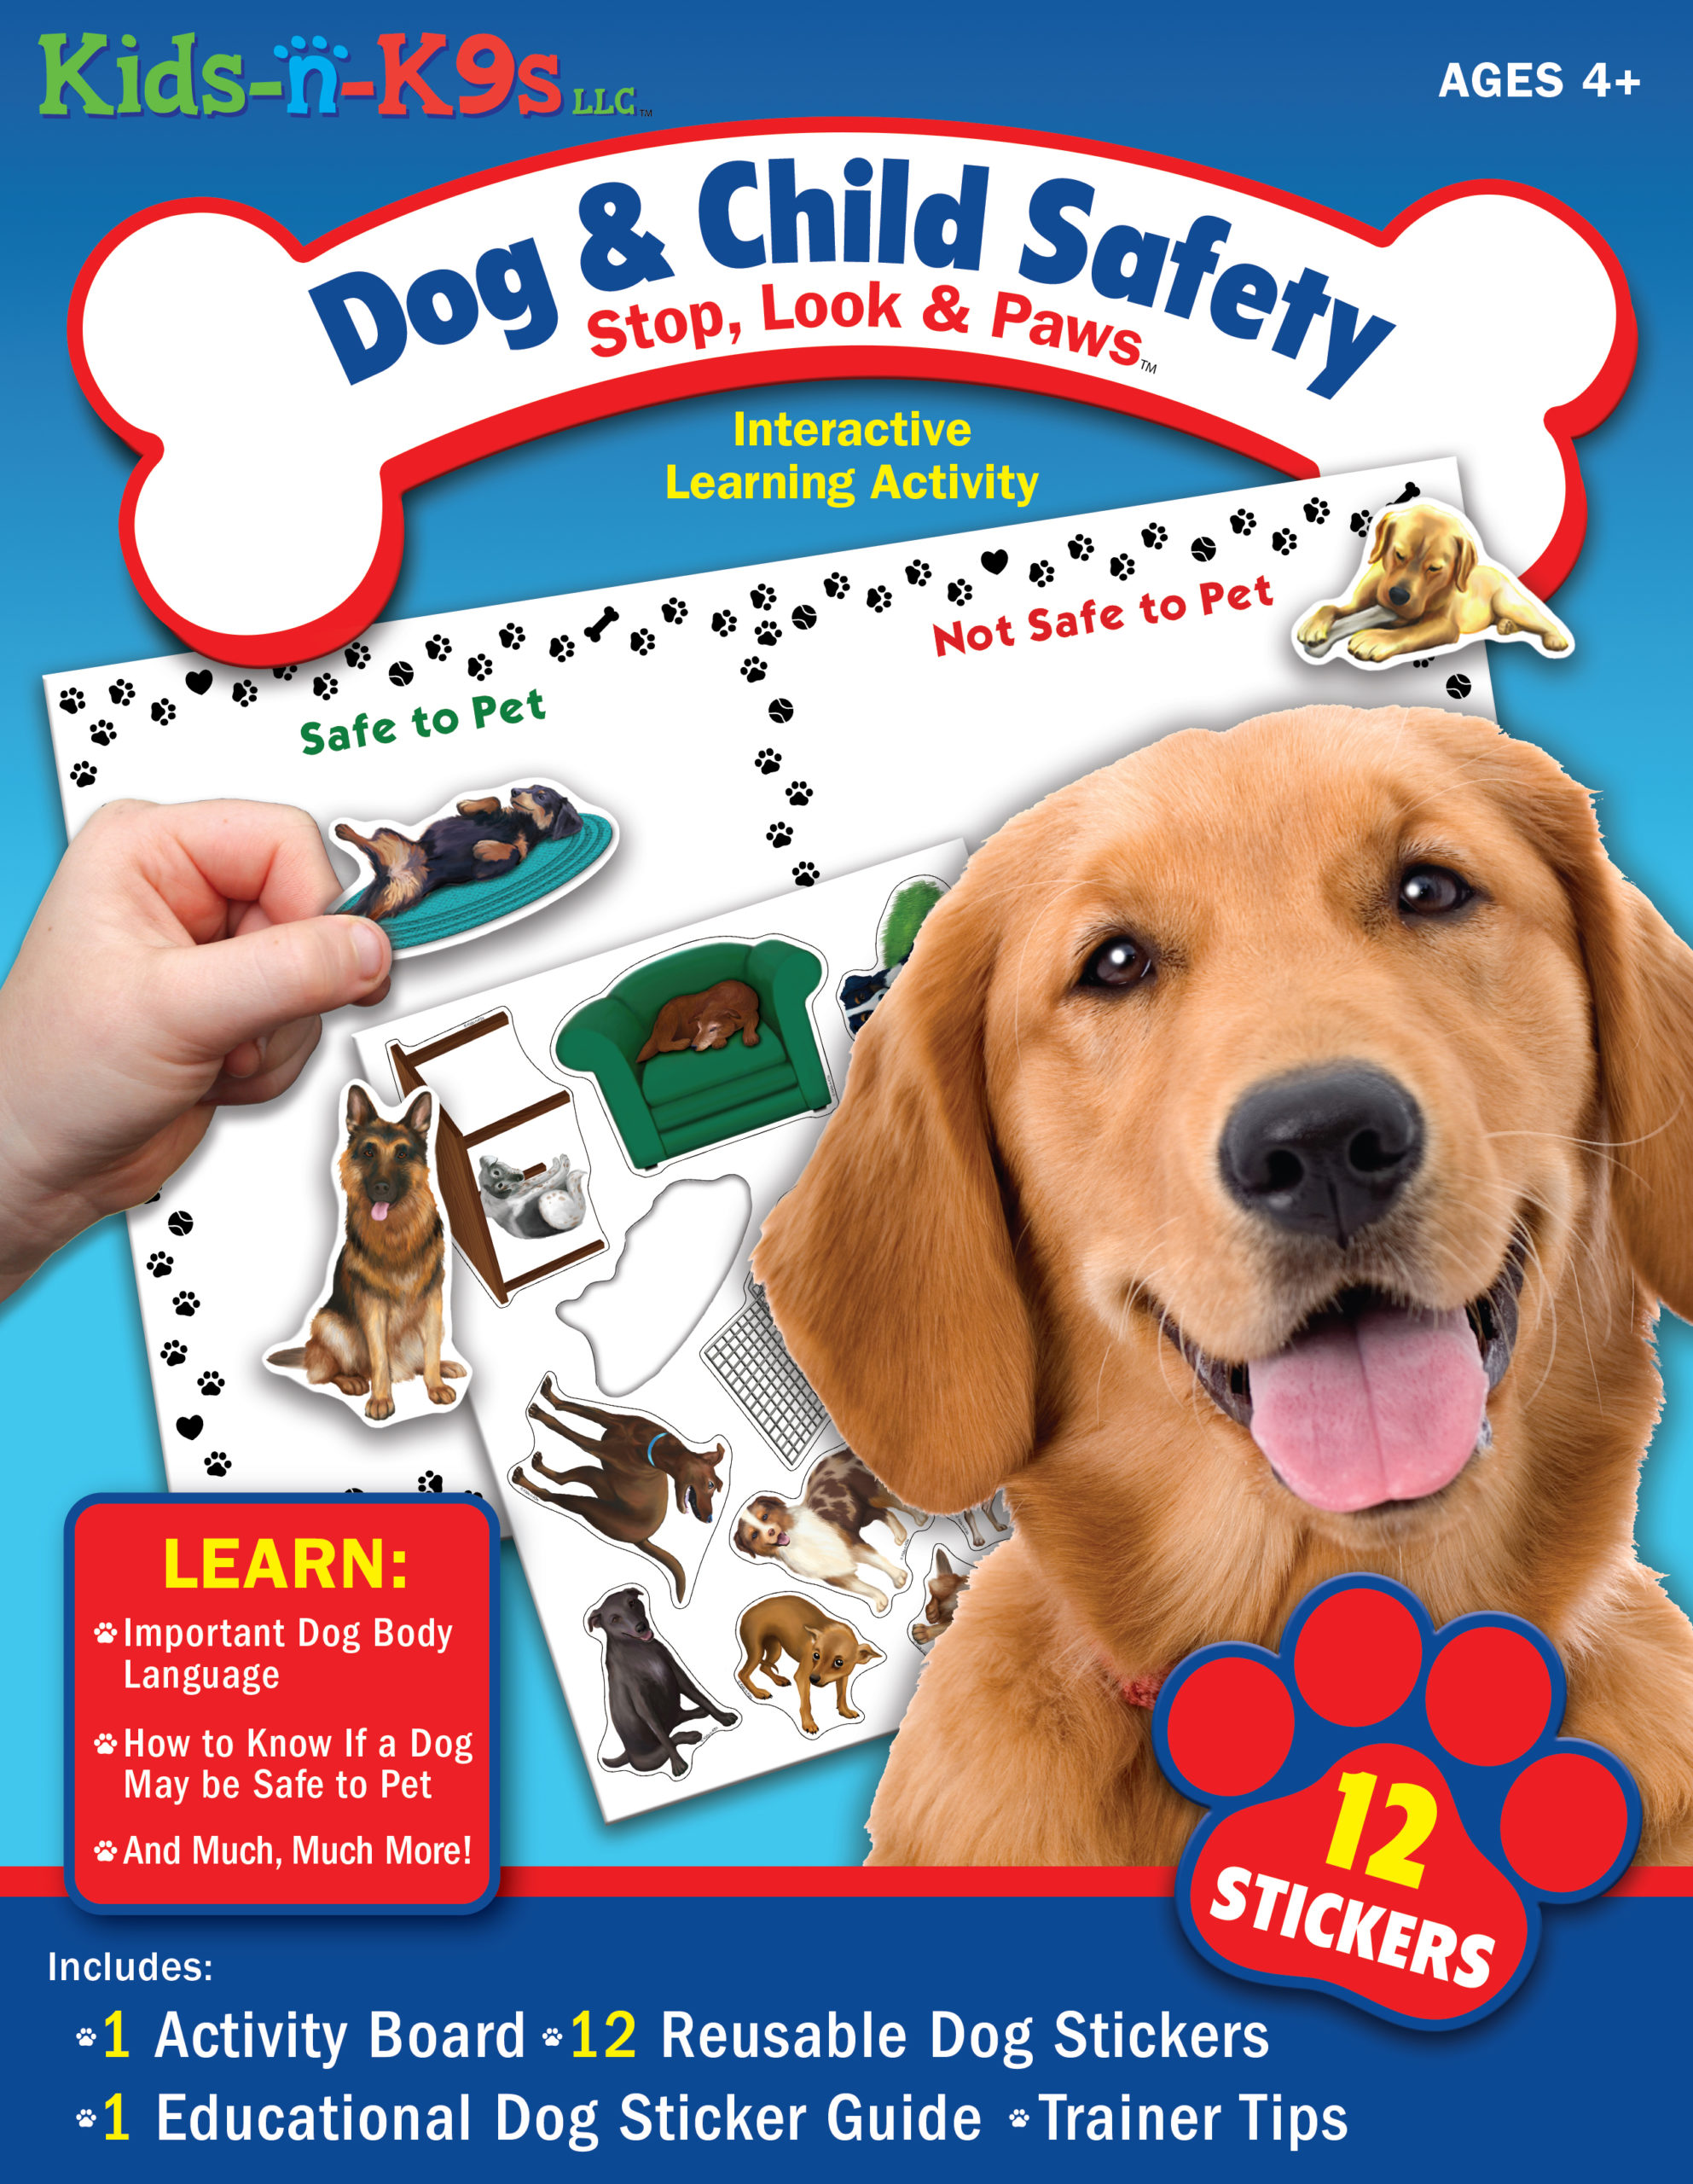 Nose work games for dogs Archives - Kids-n-K9s Dog Bite Prevention